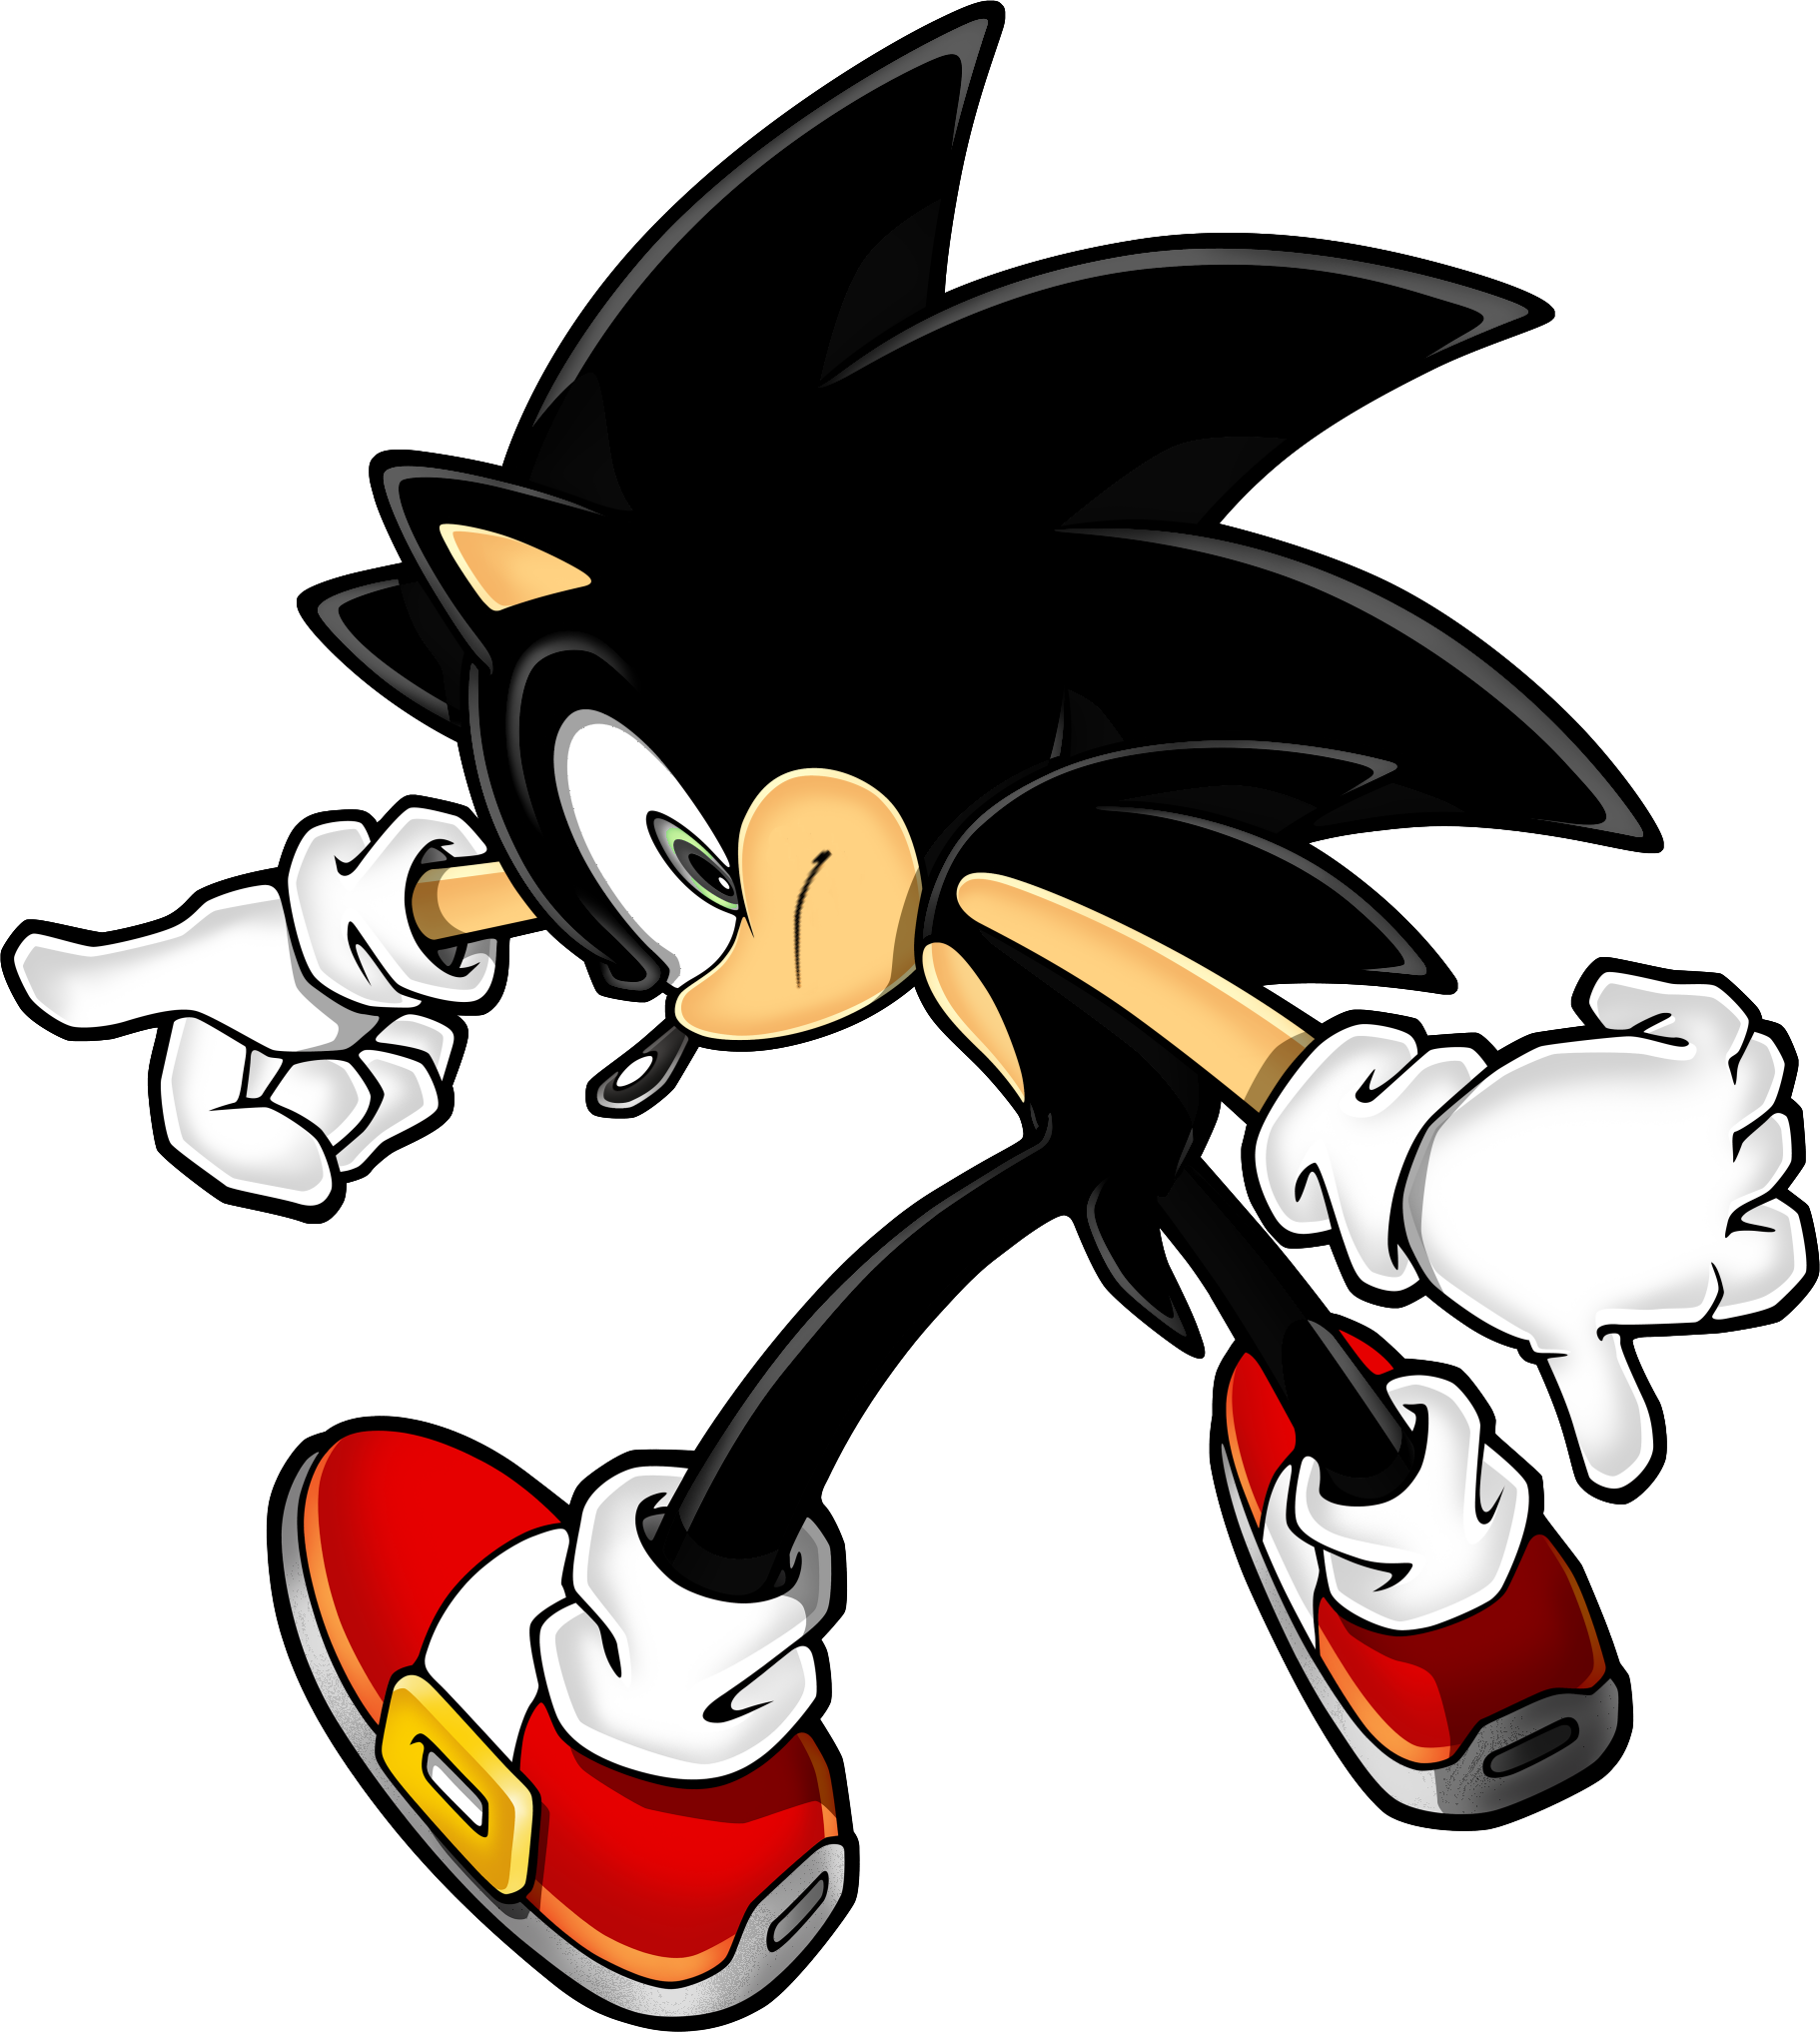 File:Kirpi Sonic Logo.png - Wikimedia Commons